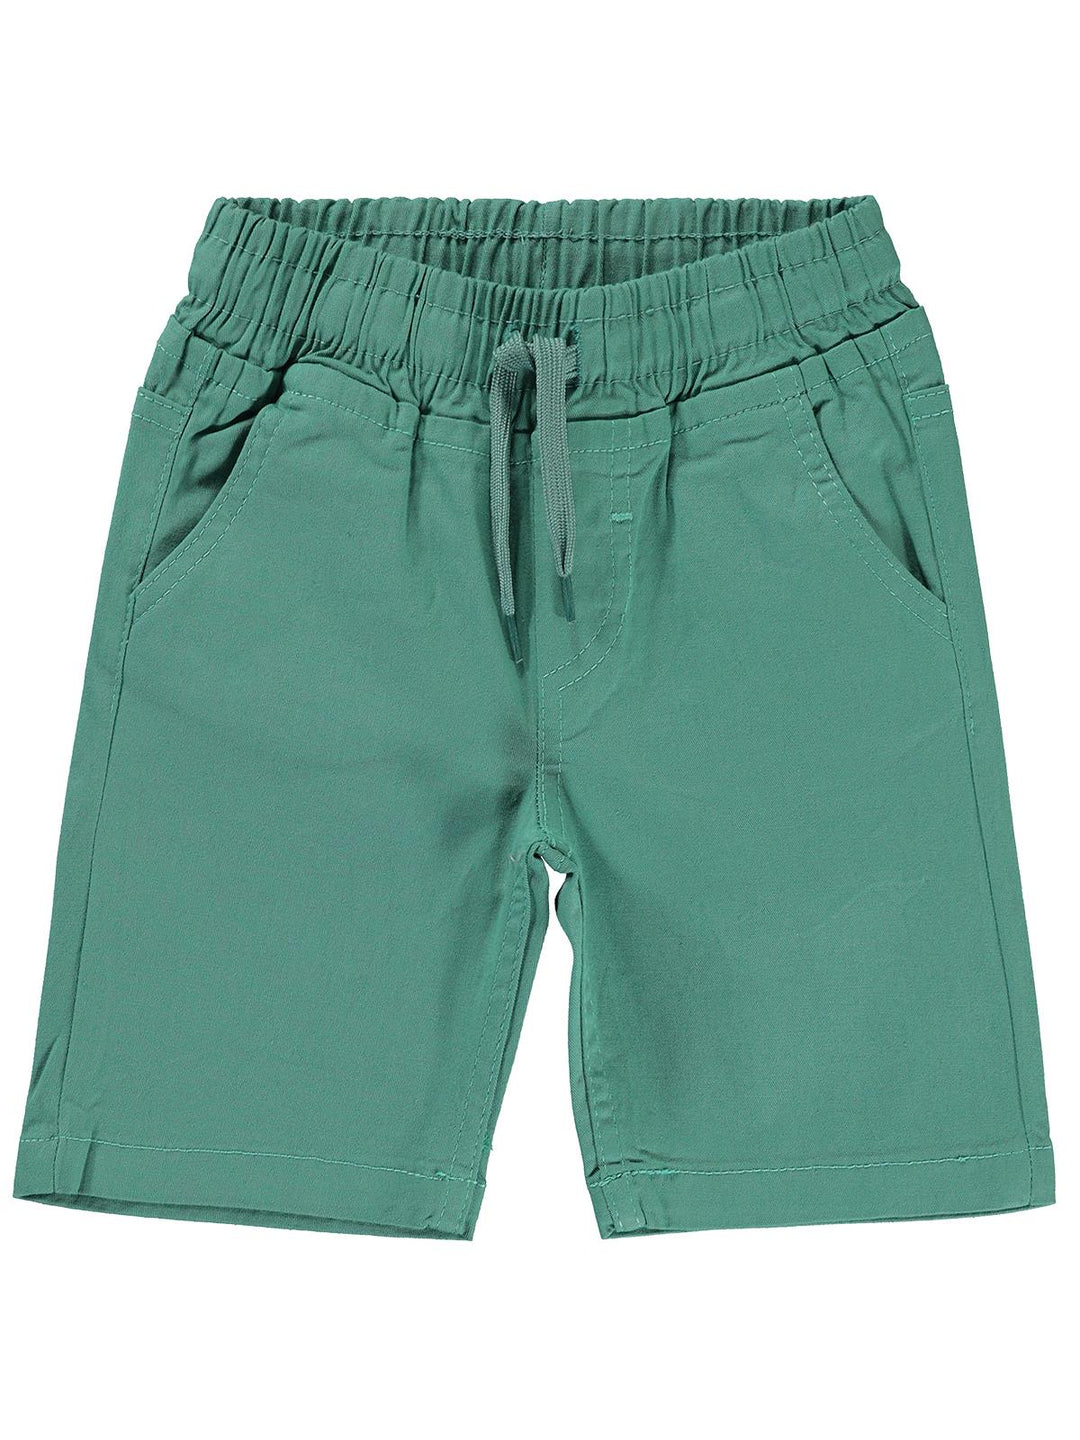 Civil Boys Cotton Shorts #2204-3 (S-22)